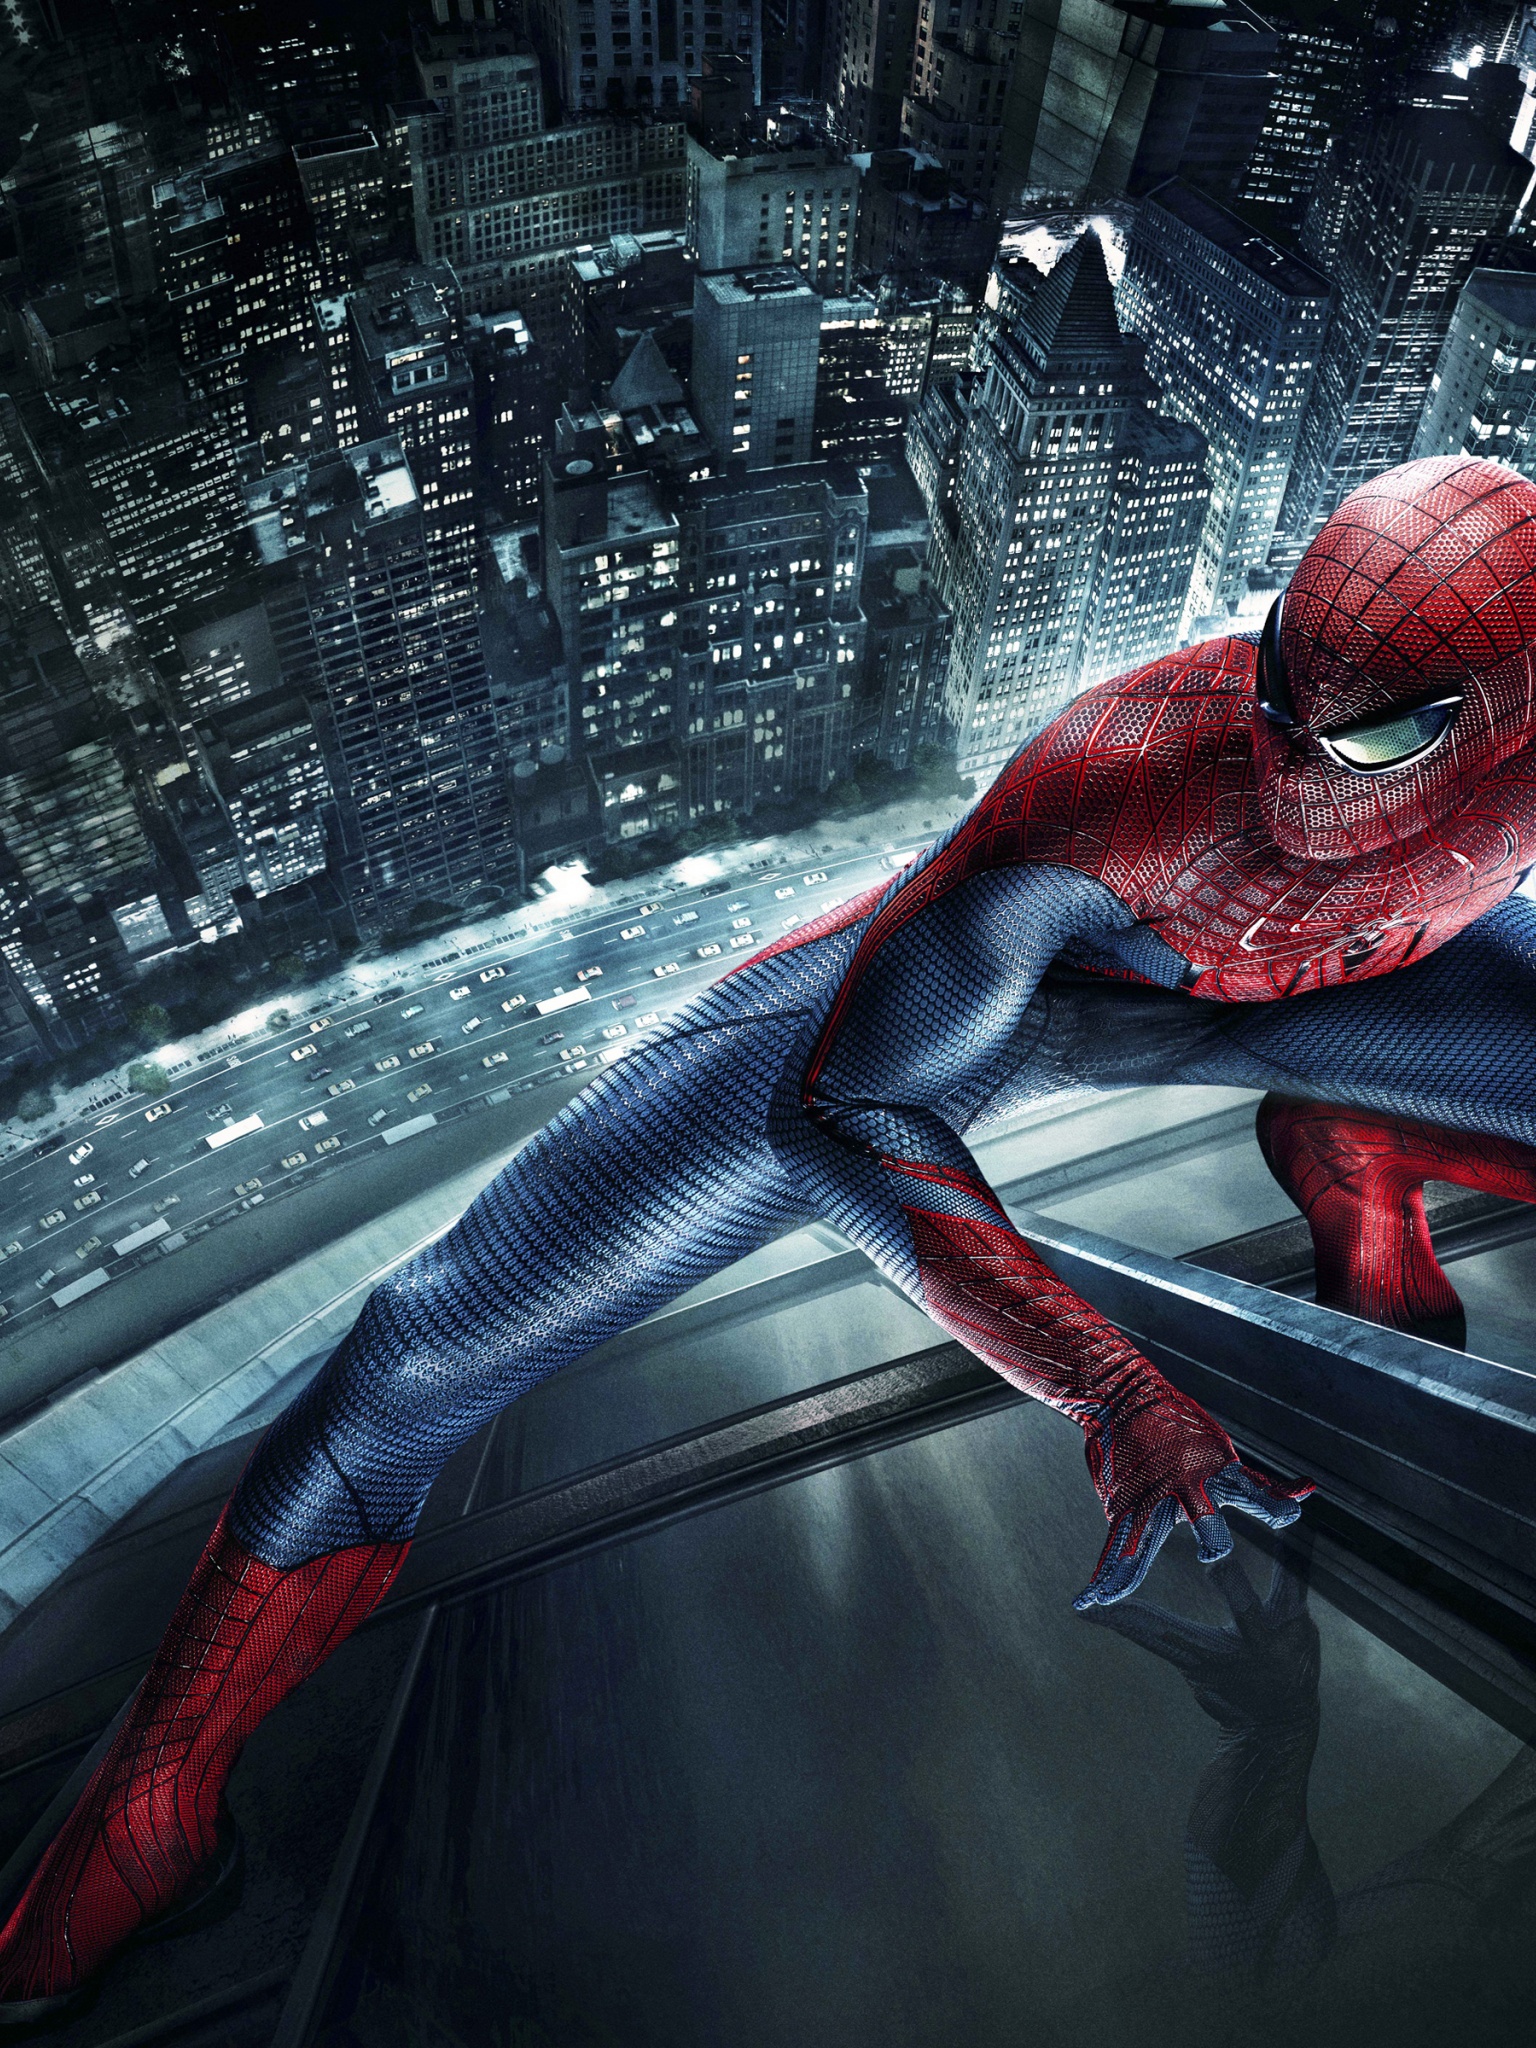 The Amazing Spider-Man (2012 Film)